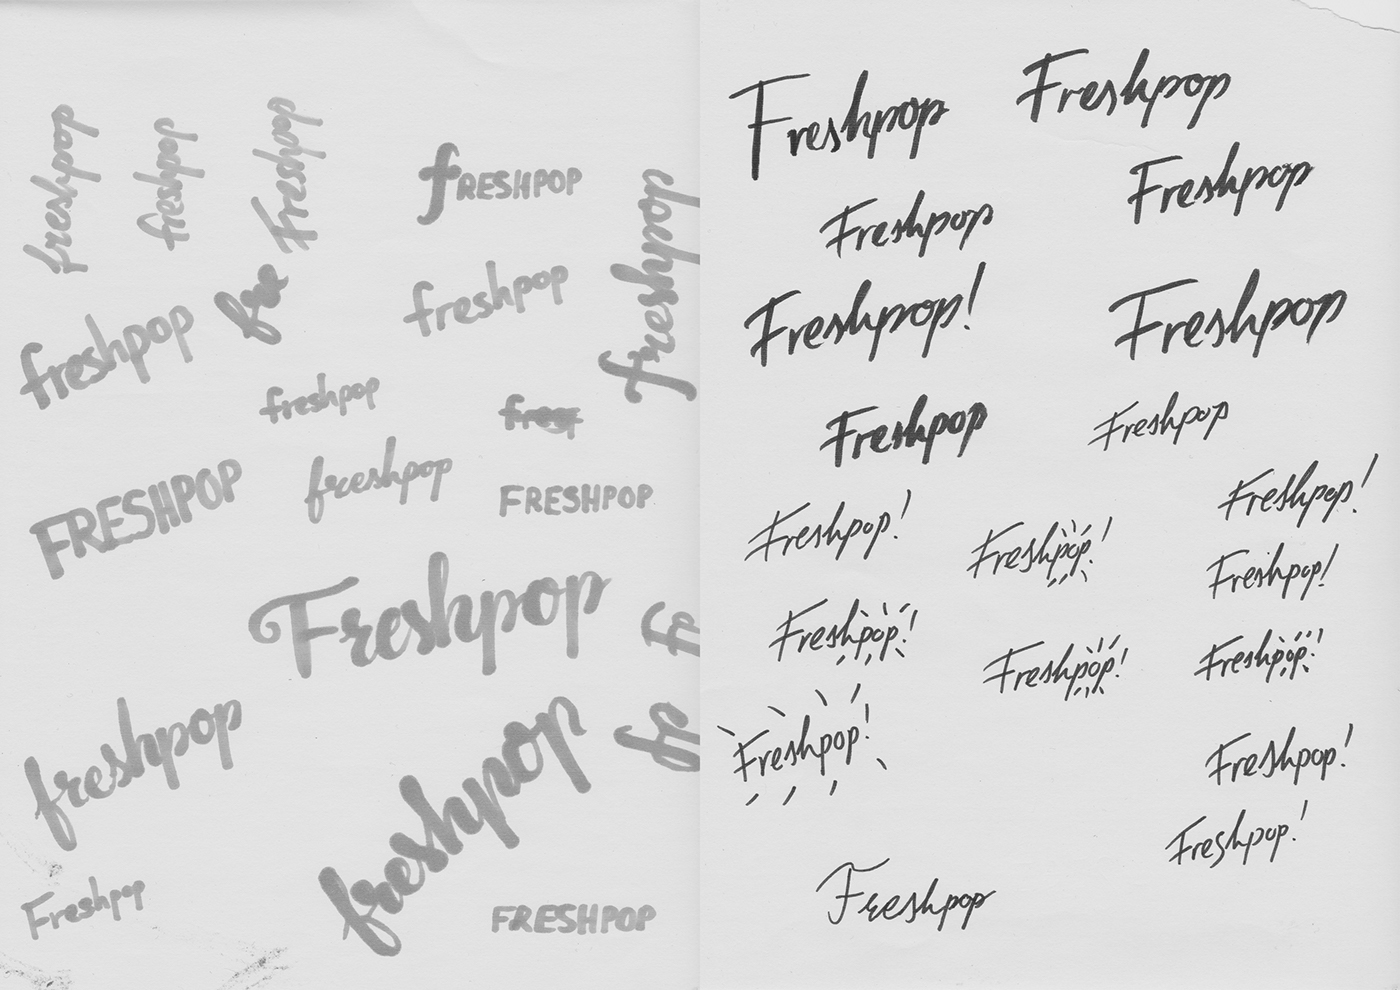 freshpop personal branding HAND LETTERING Handlettering corporate design identity studio graphic yellow